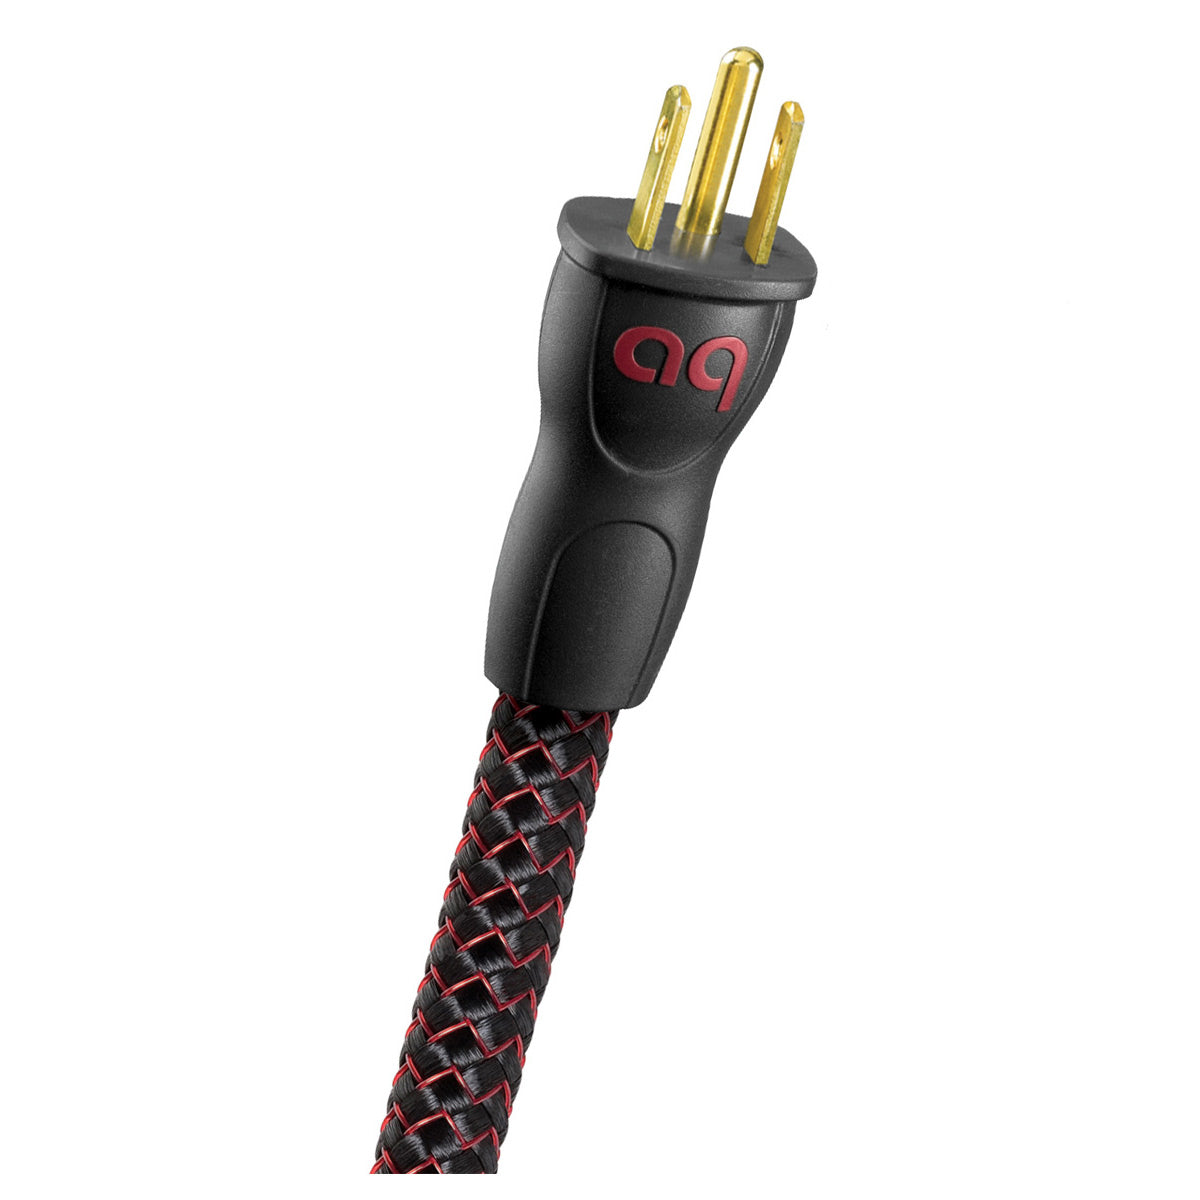 AudioQuest NRG-Z3 Low-Distortion 3-Pole AC Power Cable - 3.28' (1m)